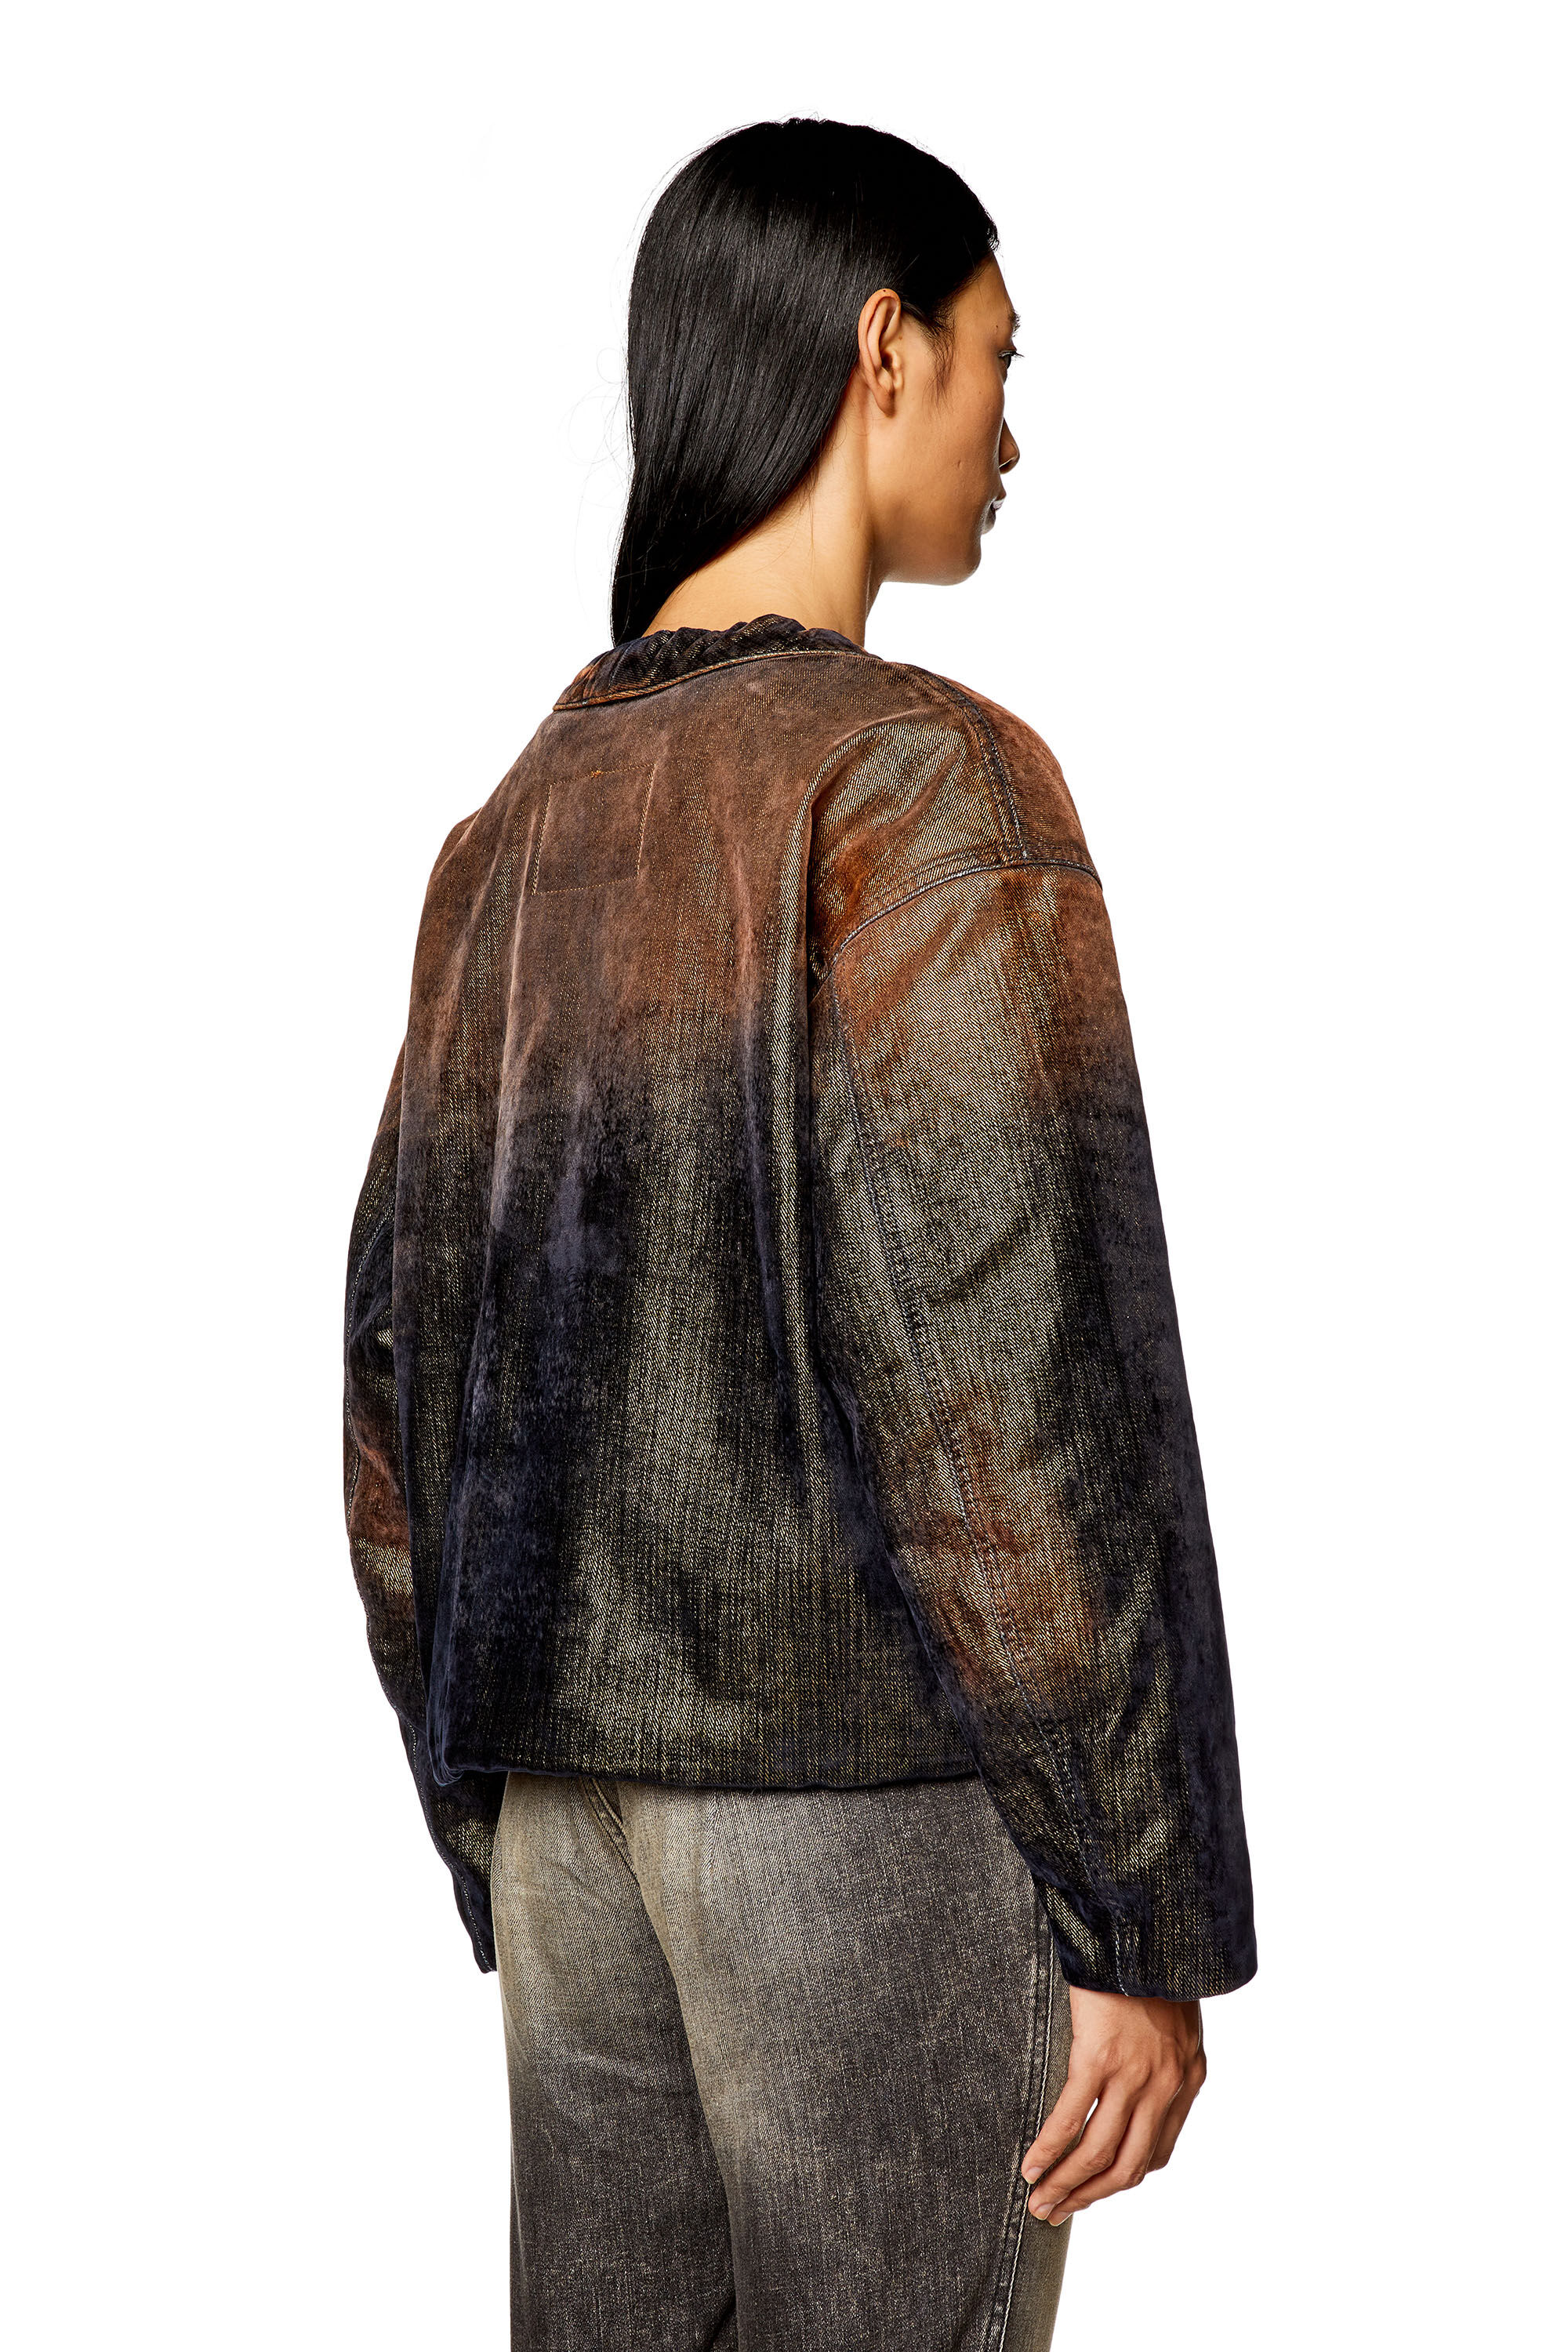 Diesel - DE-CONF-S, Woman Jacket in shimmery denim in Multicolor - Image 4